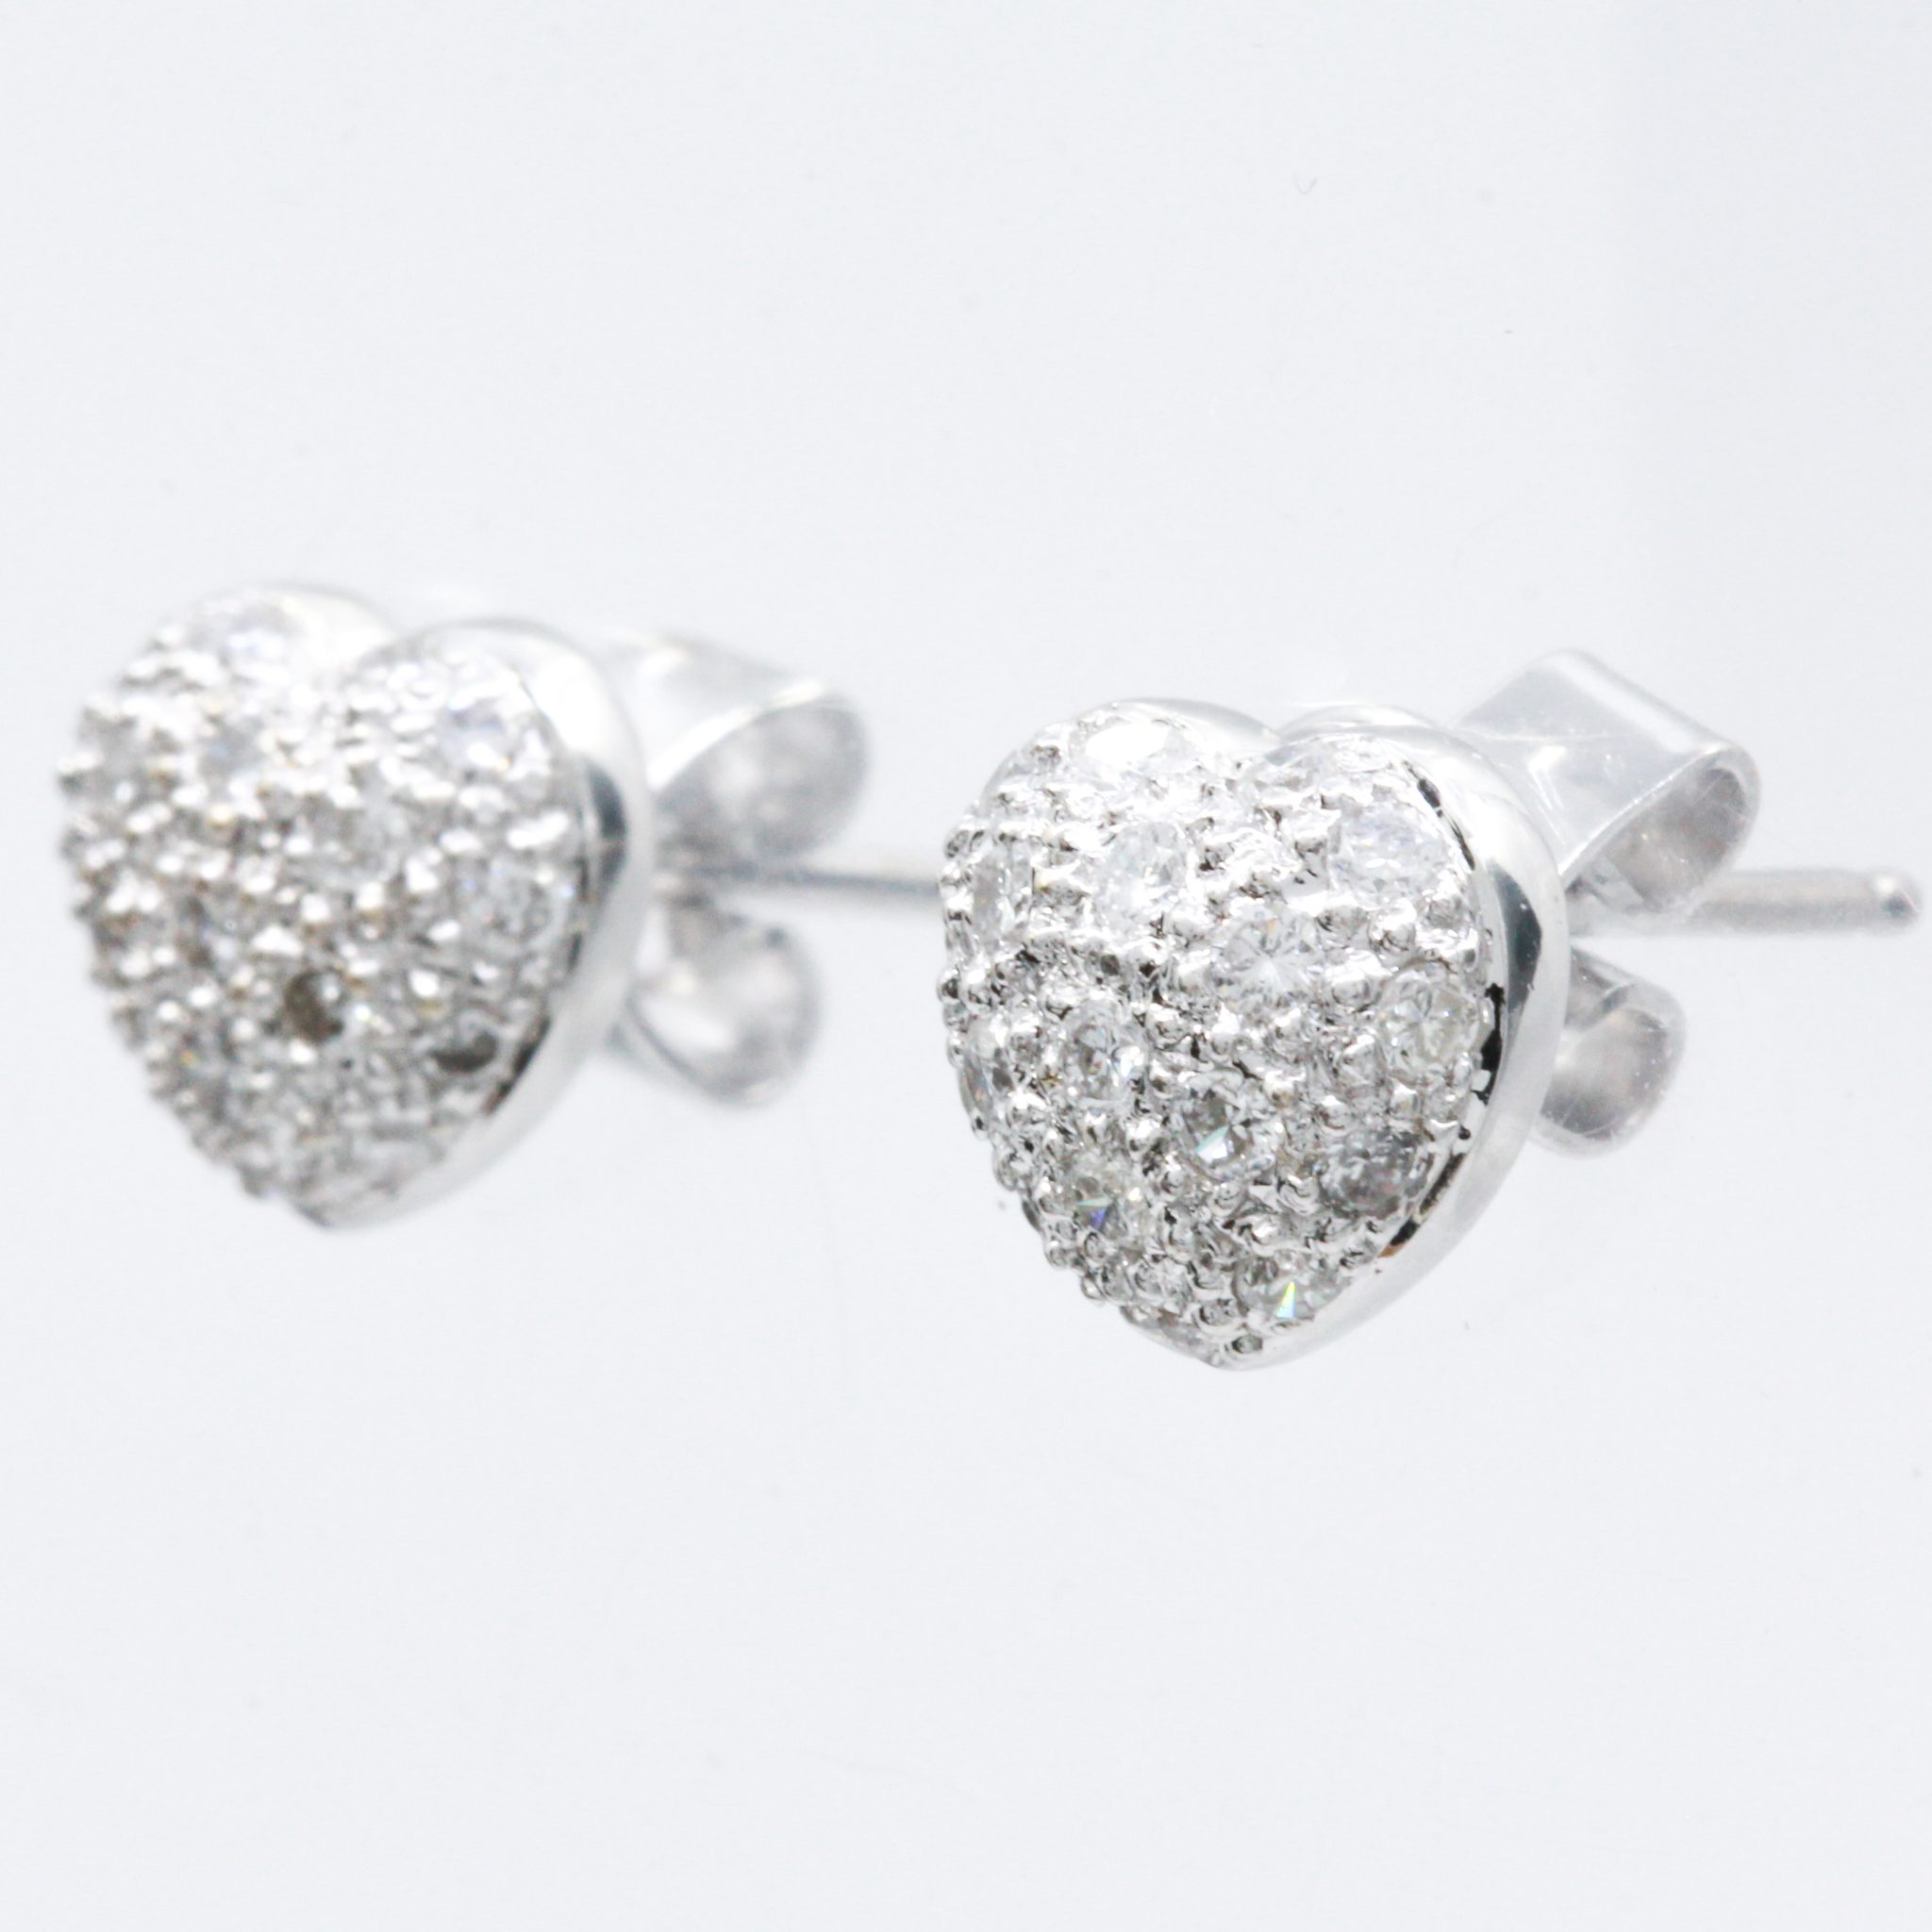 18ct White Gold Diamond Stud Earrings | Allgem Jewellers